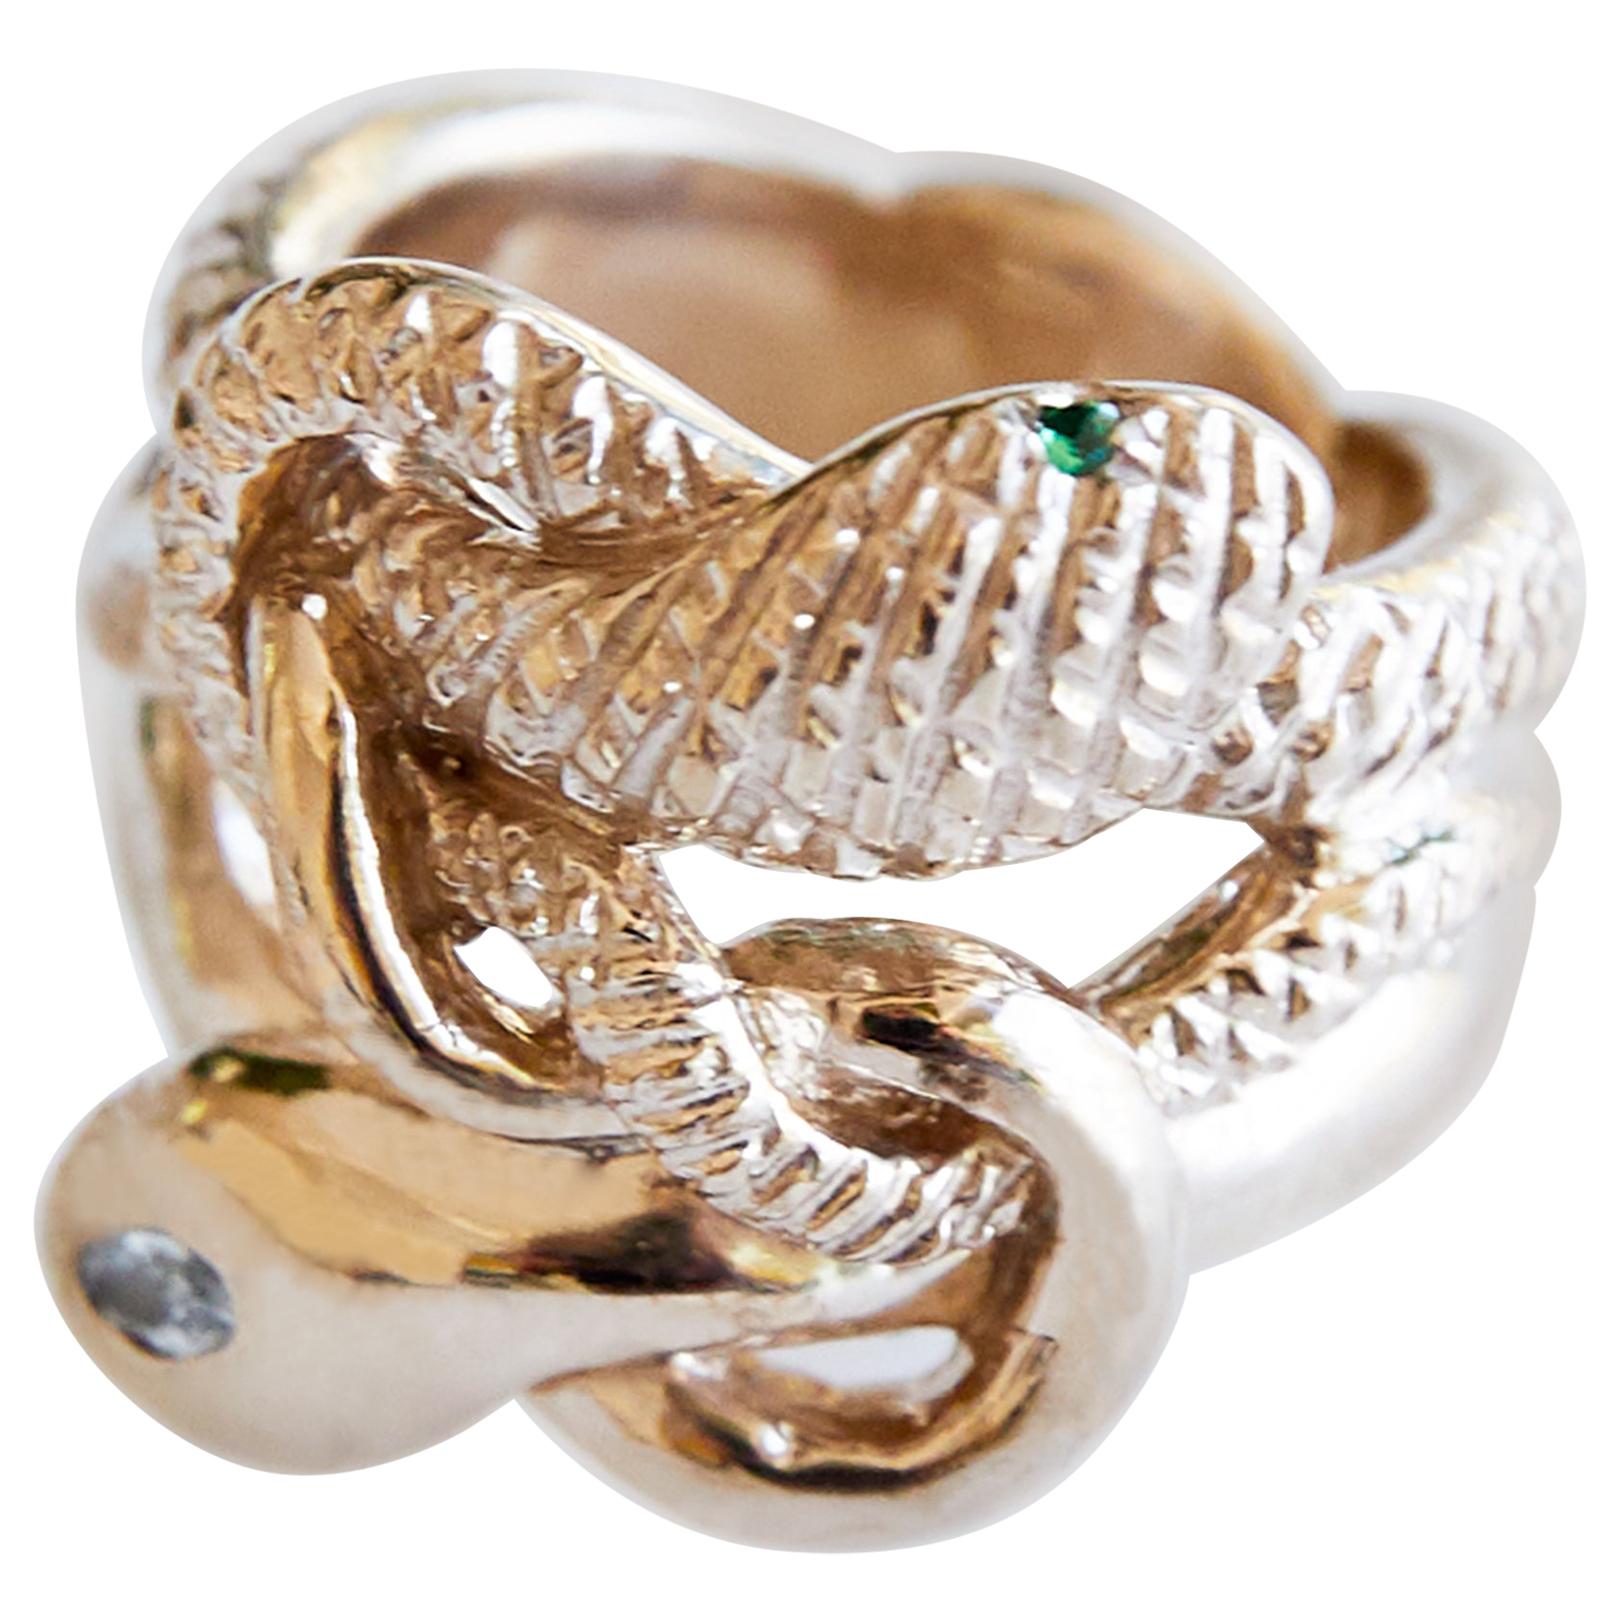 White Diamond Emerald Snake Ring Gold Vermeil Cocktail Ring  J Dauphin

1 marquis White Diamond 2 pcs Emerald 2 pcs Ruby 14 k Gold Vermeil
J DAUPHIN 